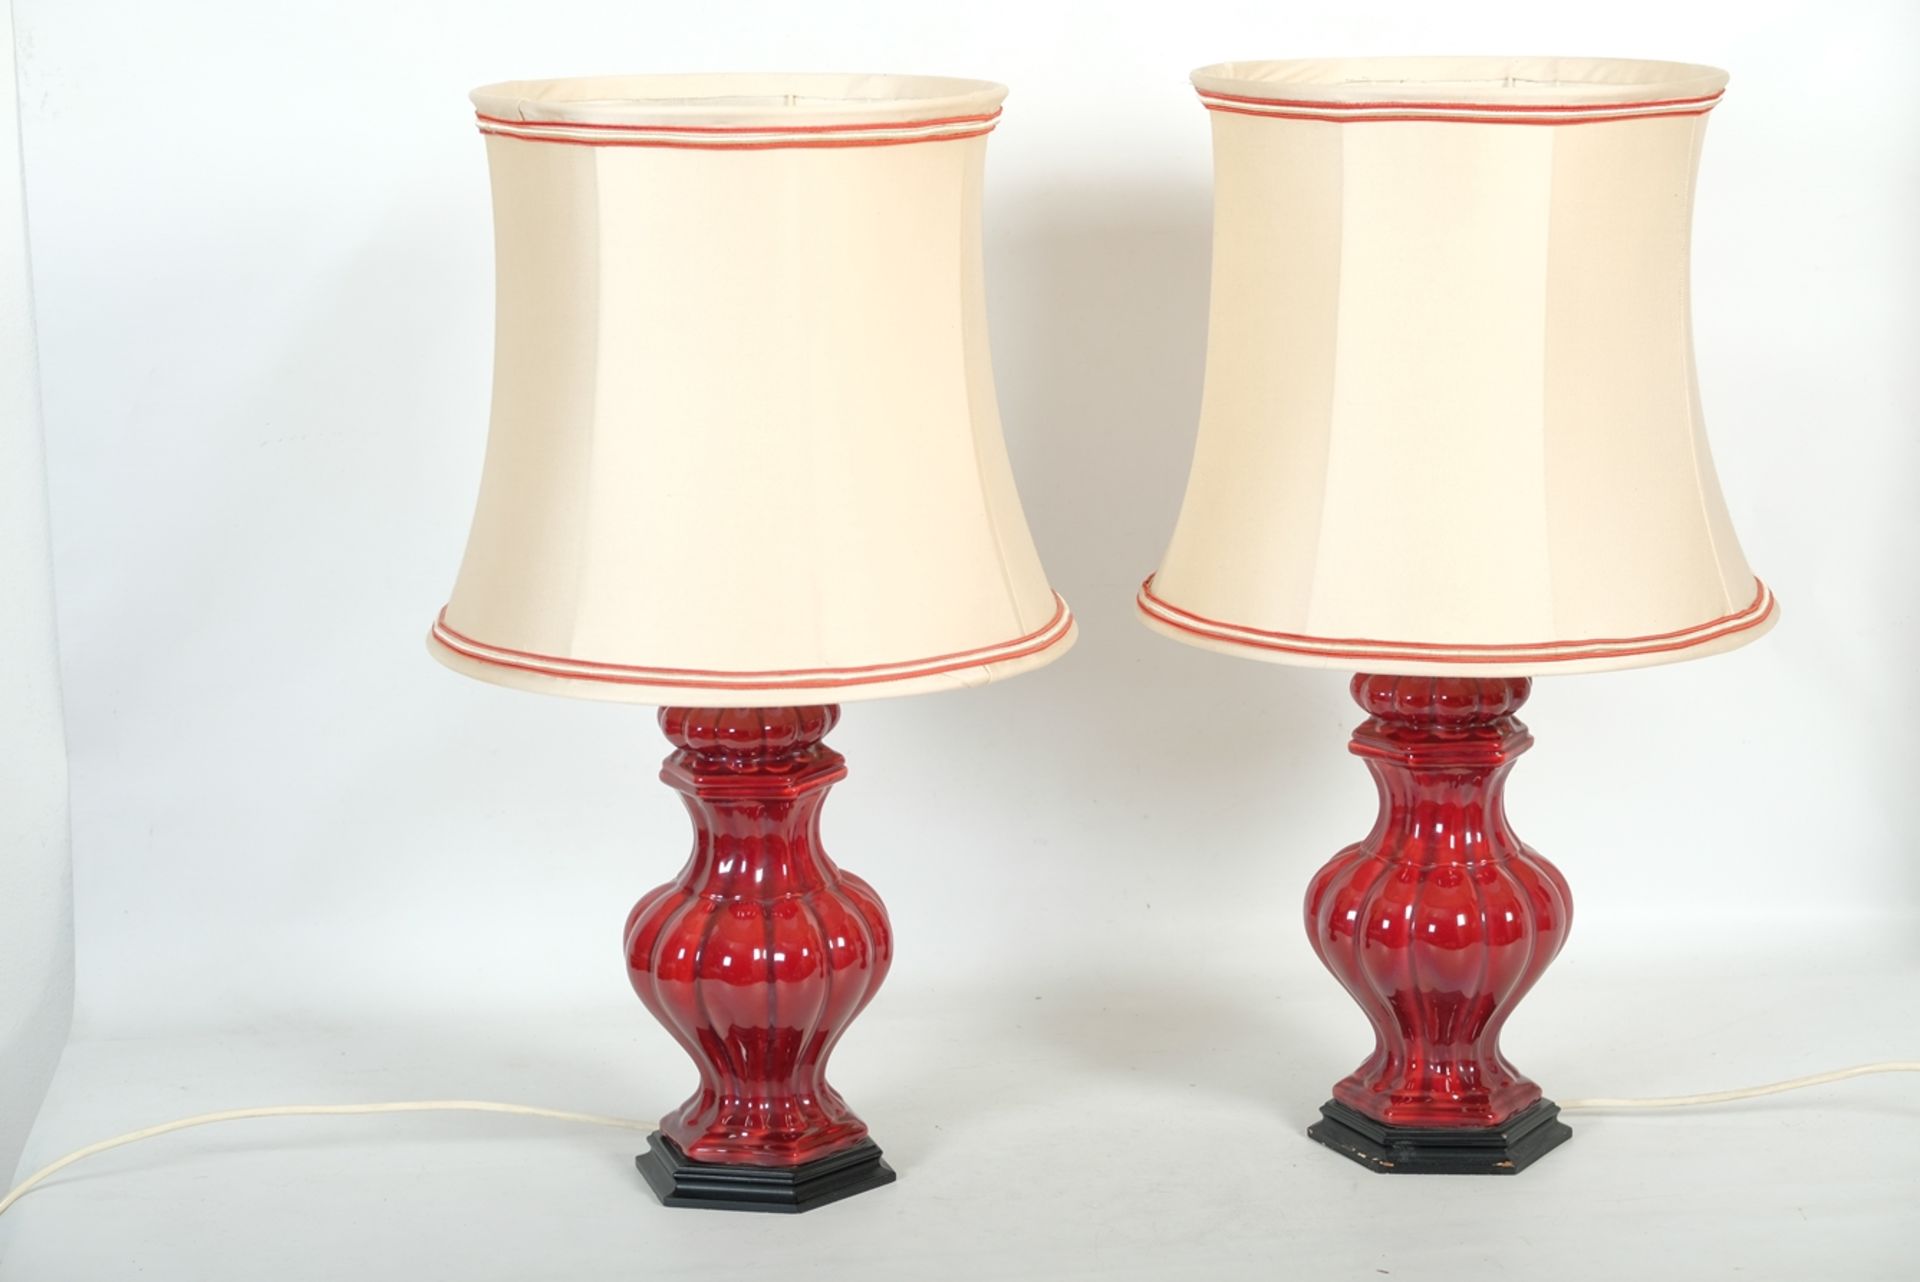 Zwei Keramik Lampen, Höhe 68,5cm, wunderschöne Keramiklampen in einem Bordeauxton, der Lampenschirm